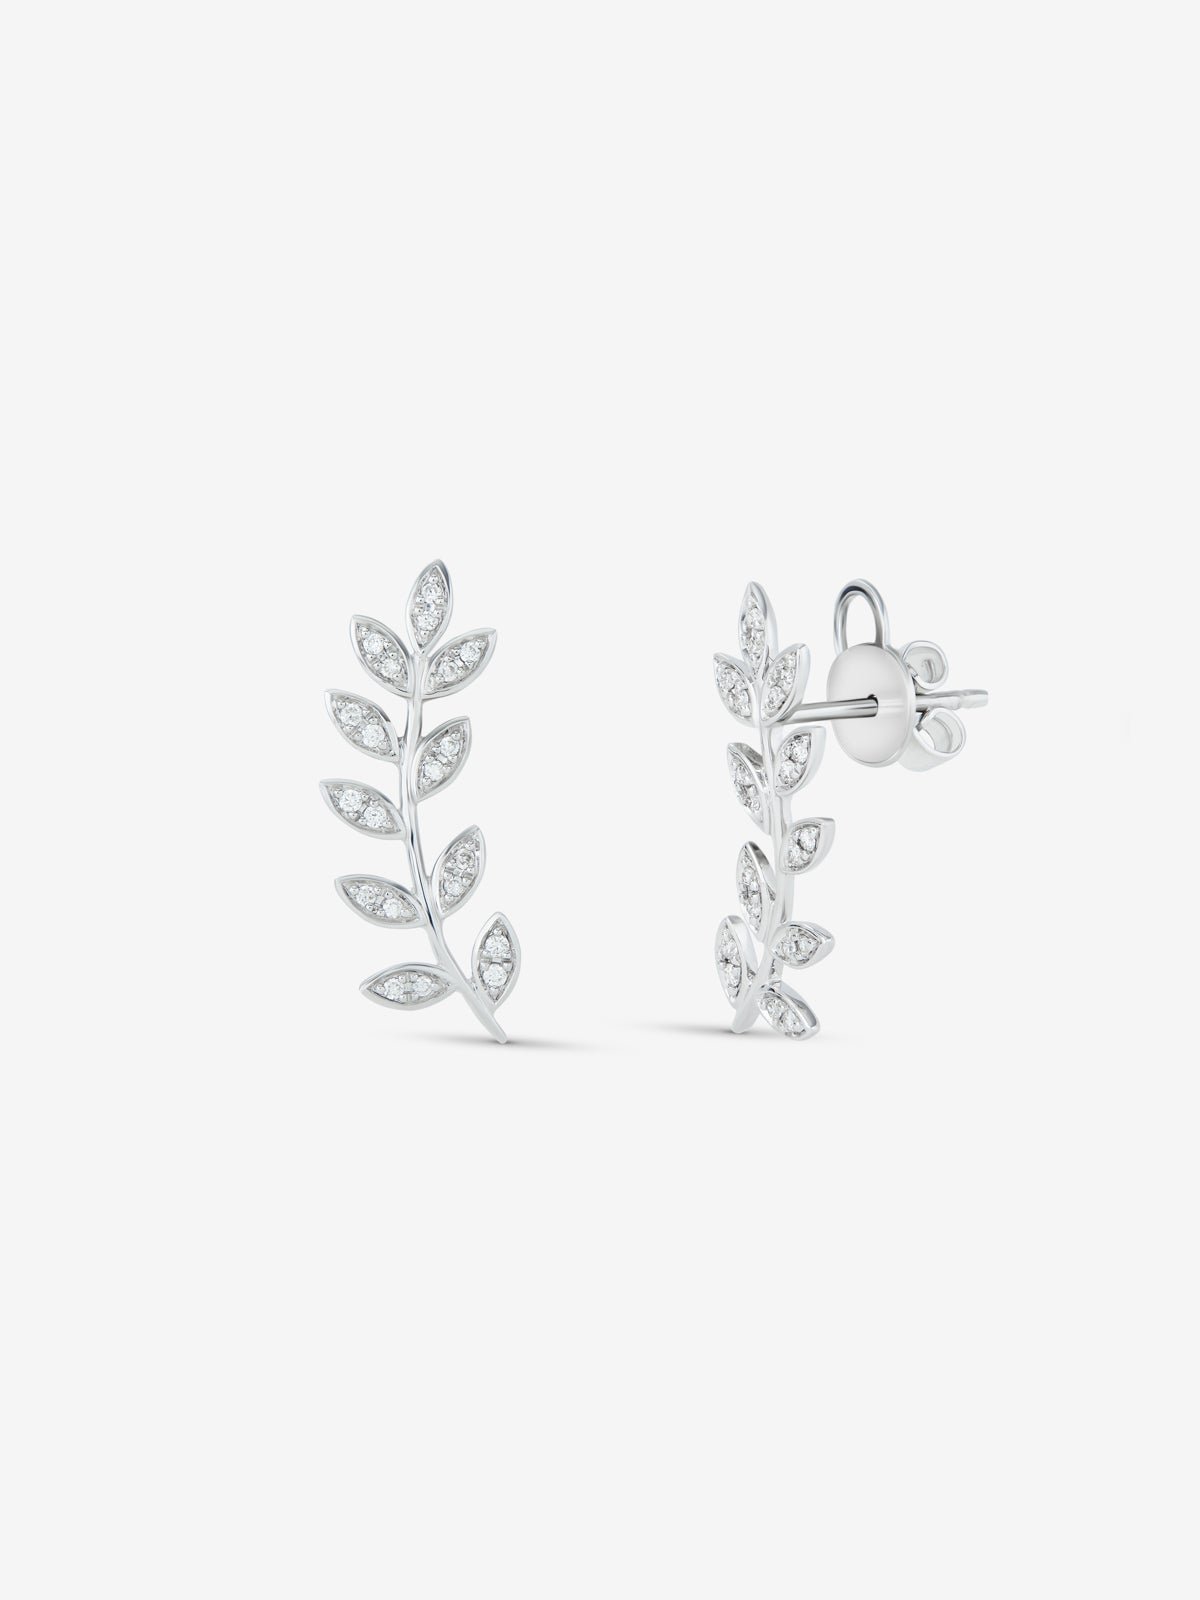 18K White Gold Climber Earrings with Diamond Leaves